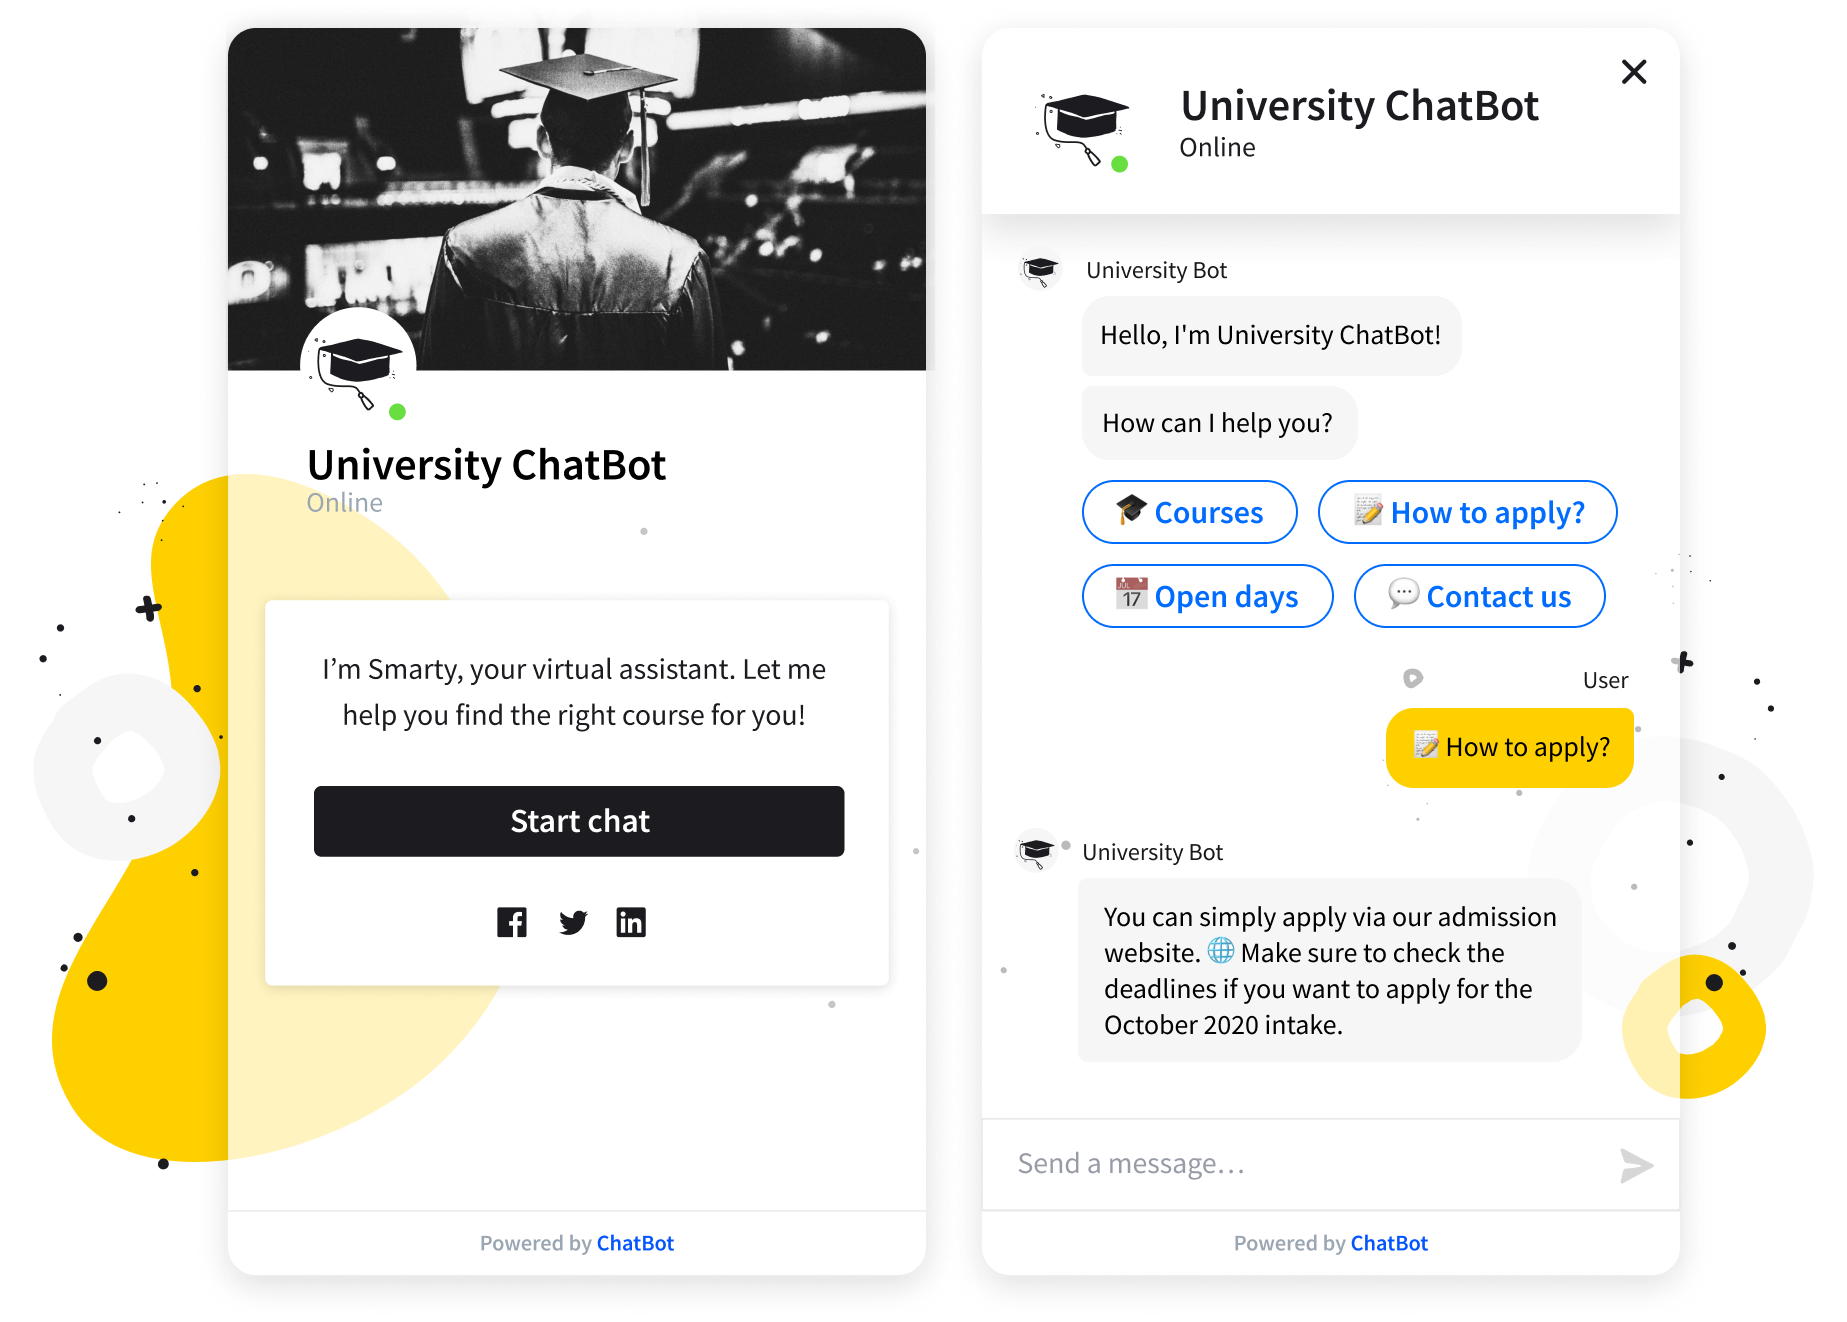 University ChatBot